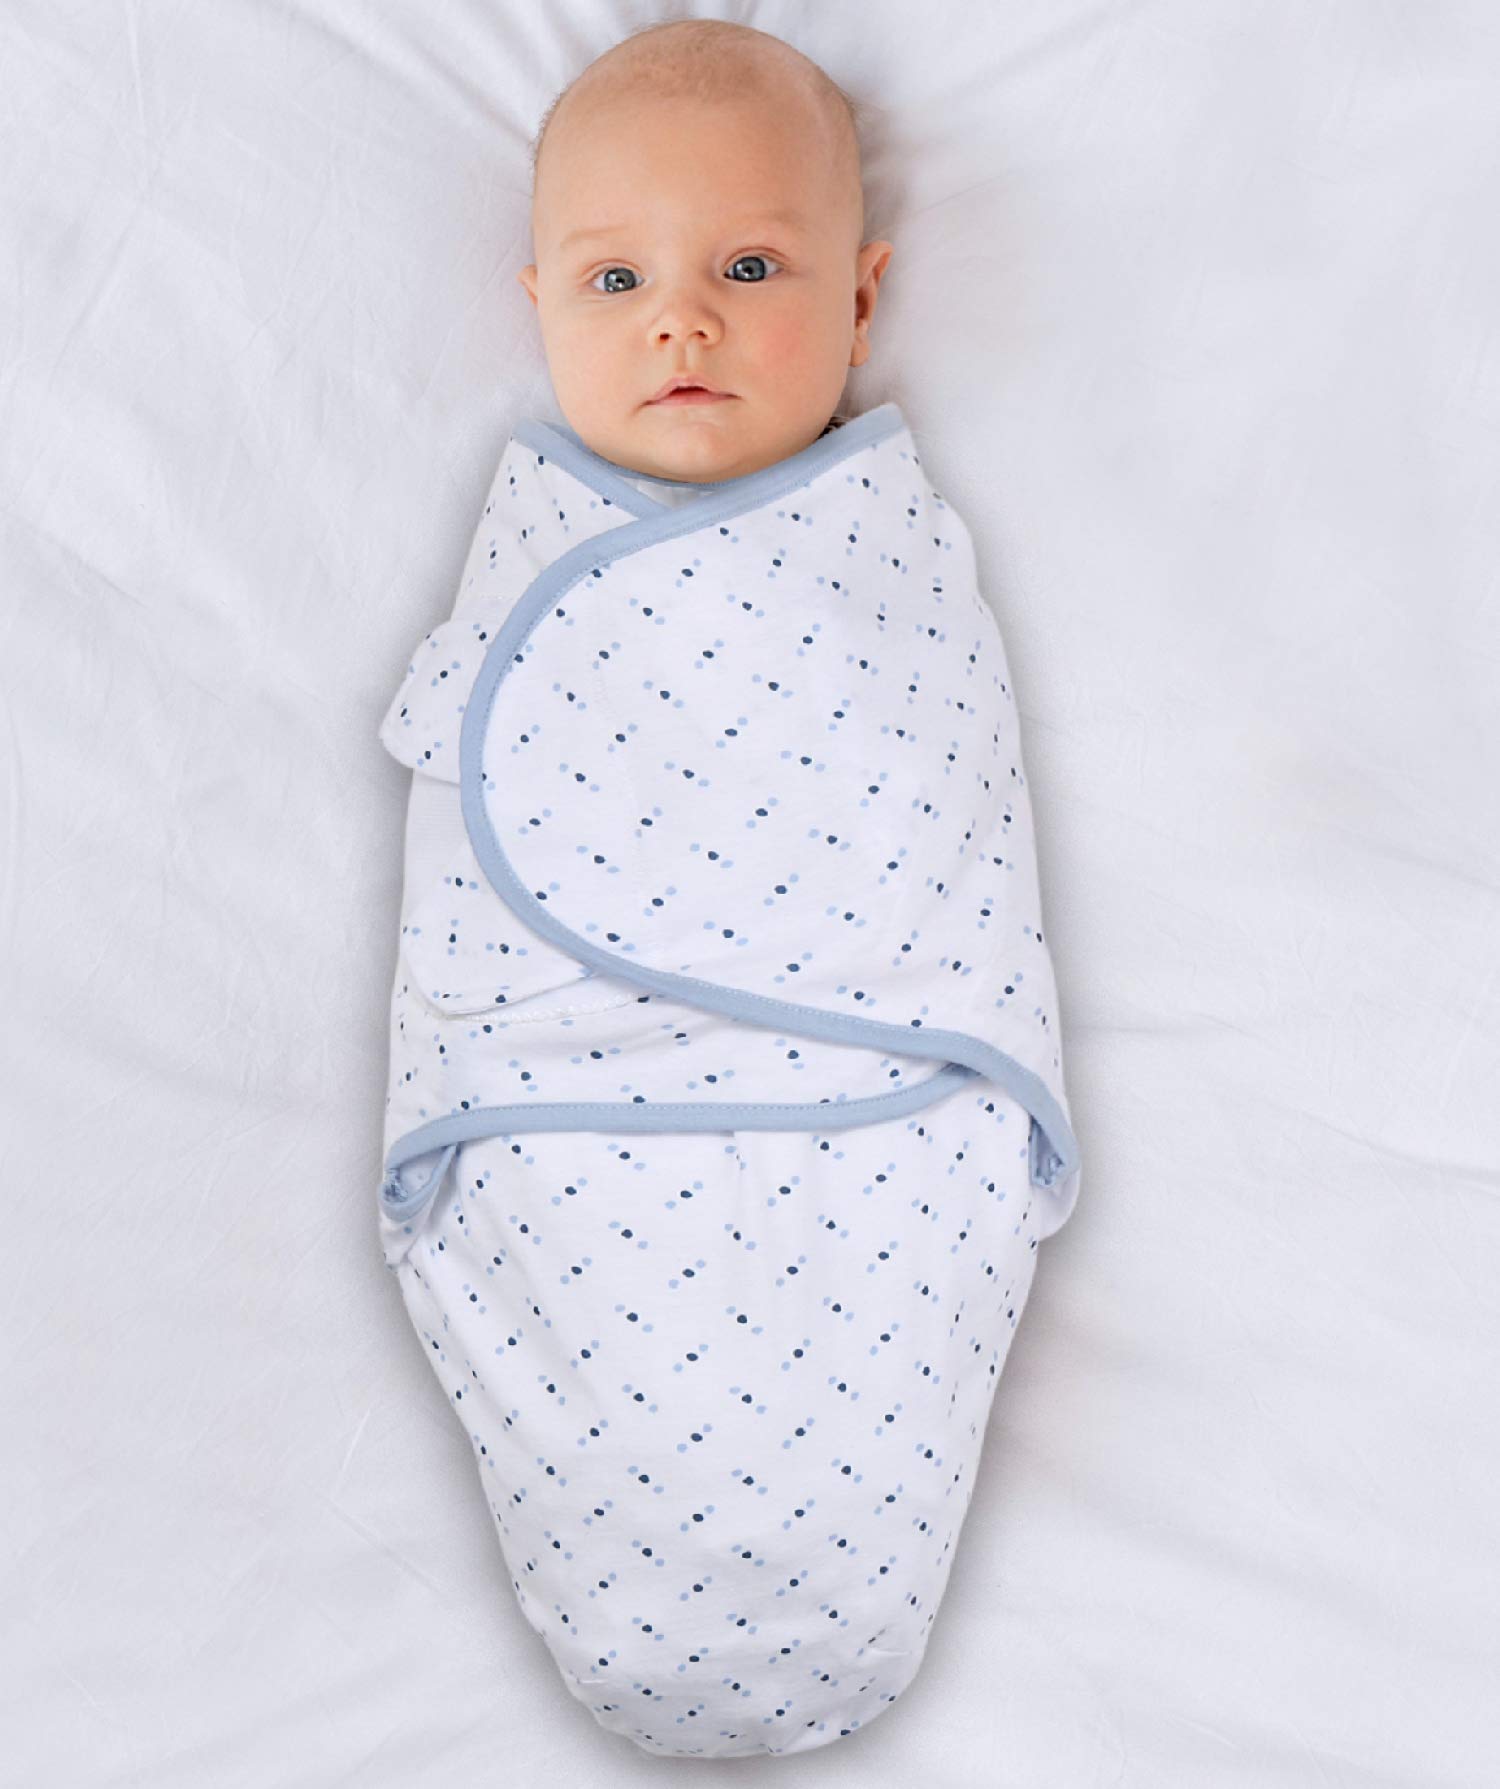 The Peanutshell Baby Swaddle Blankets for Boys or Girls, Blue Dinosaur & Stars, 3 Pack Wrap Set, 2 Sizes (Small/Medium)